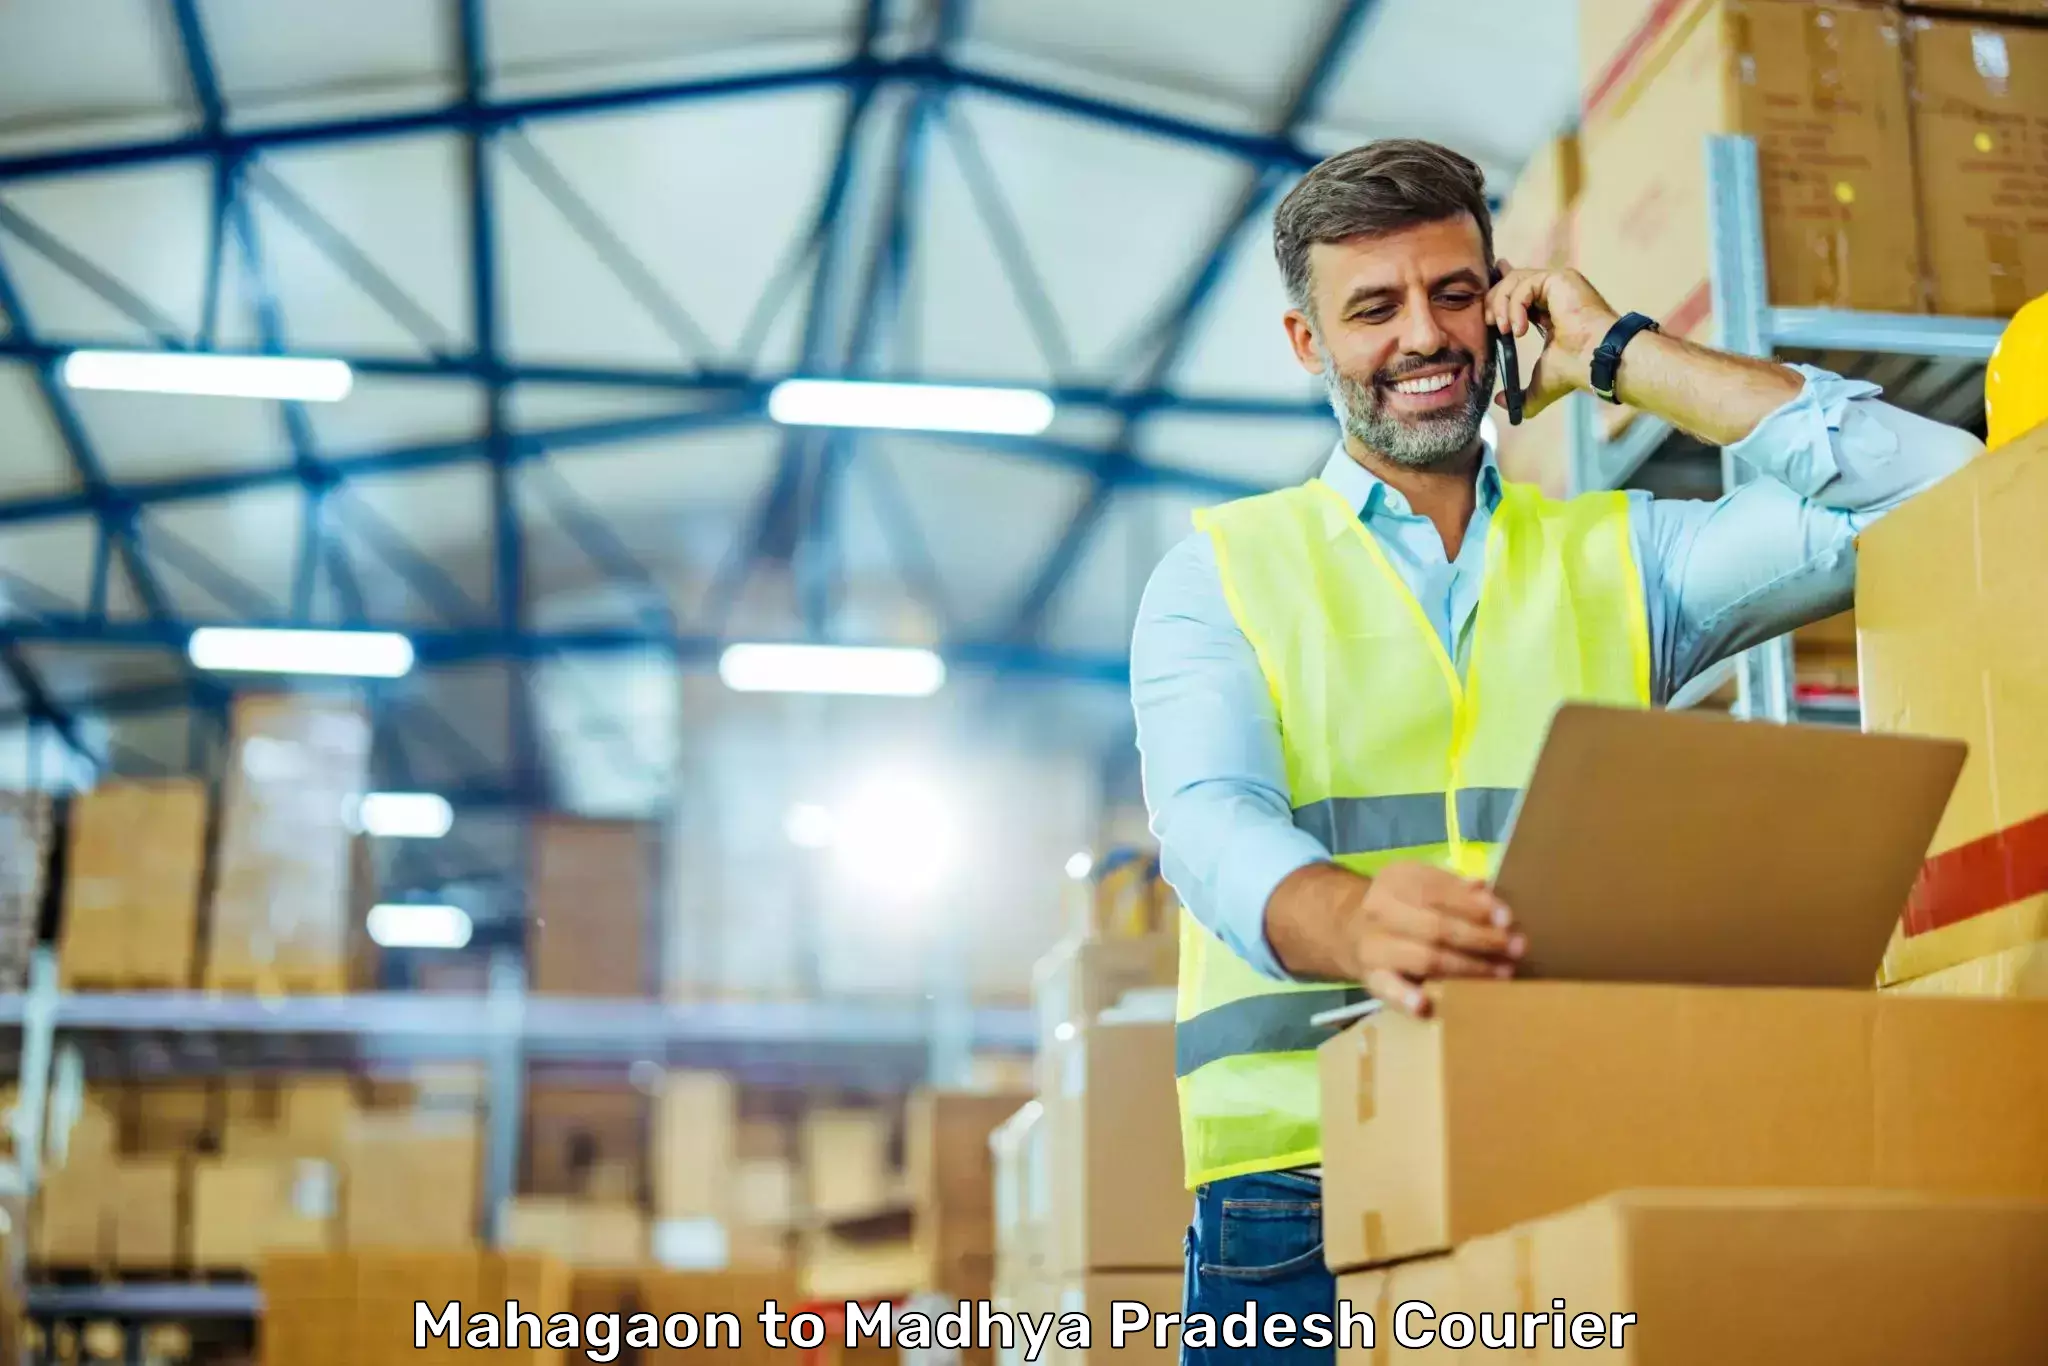 Customer-focused courier Mahagaon to Depalpur